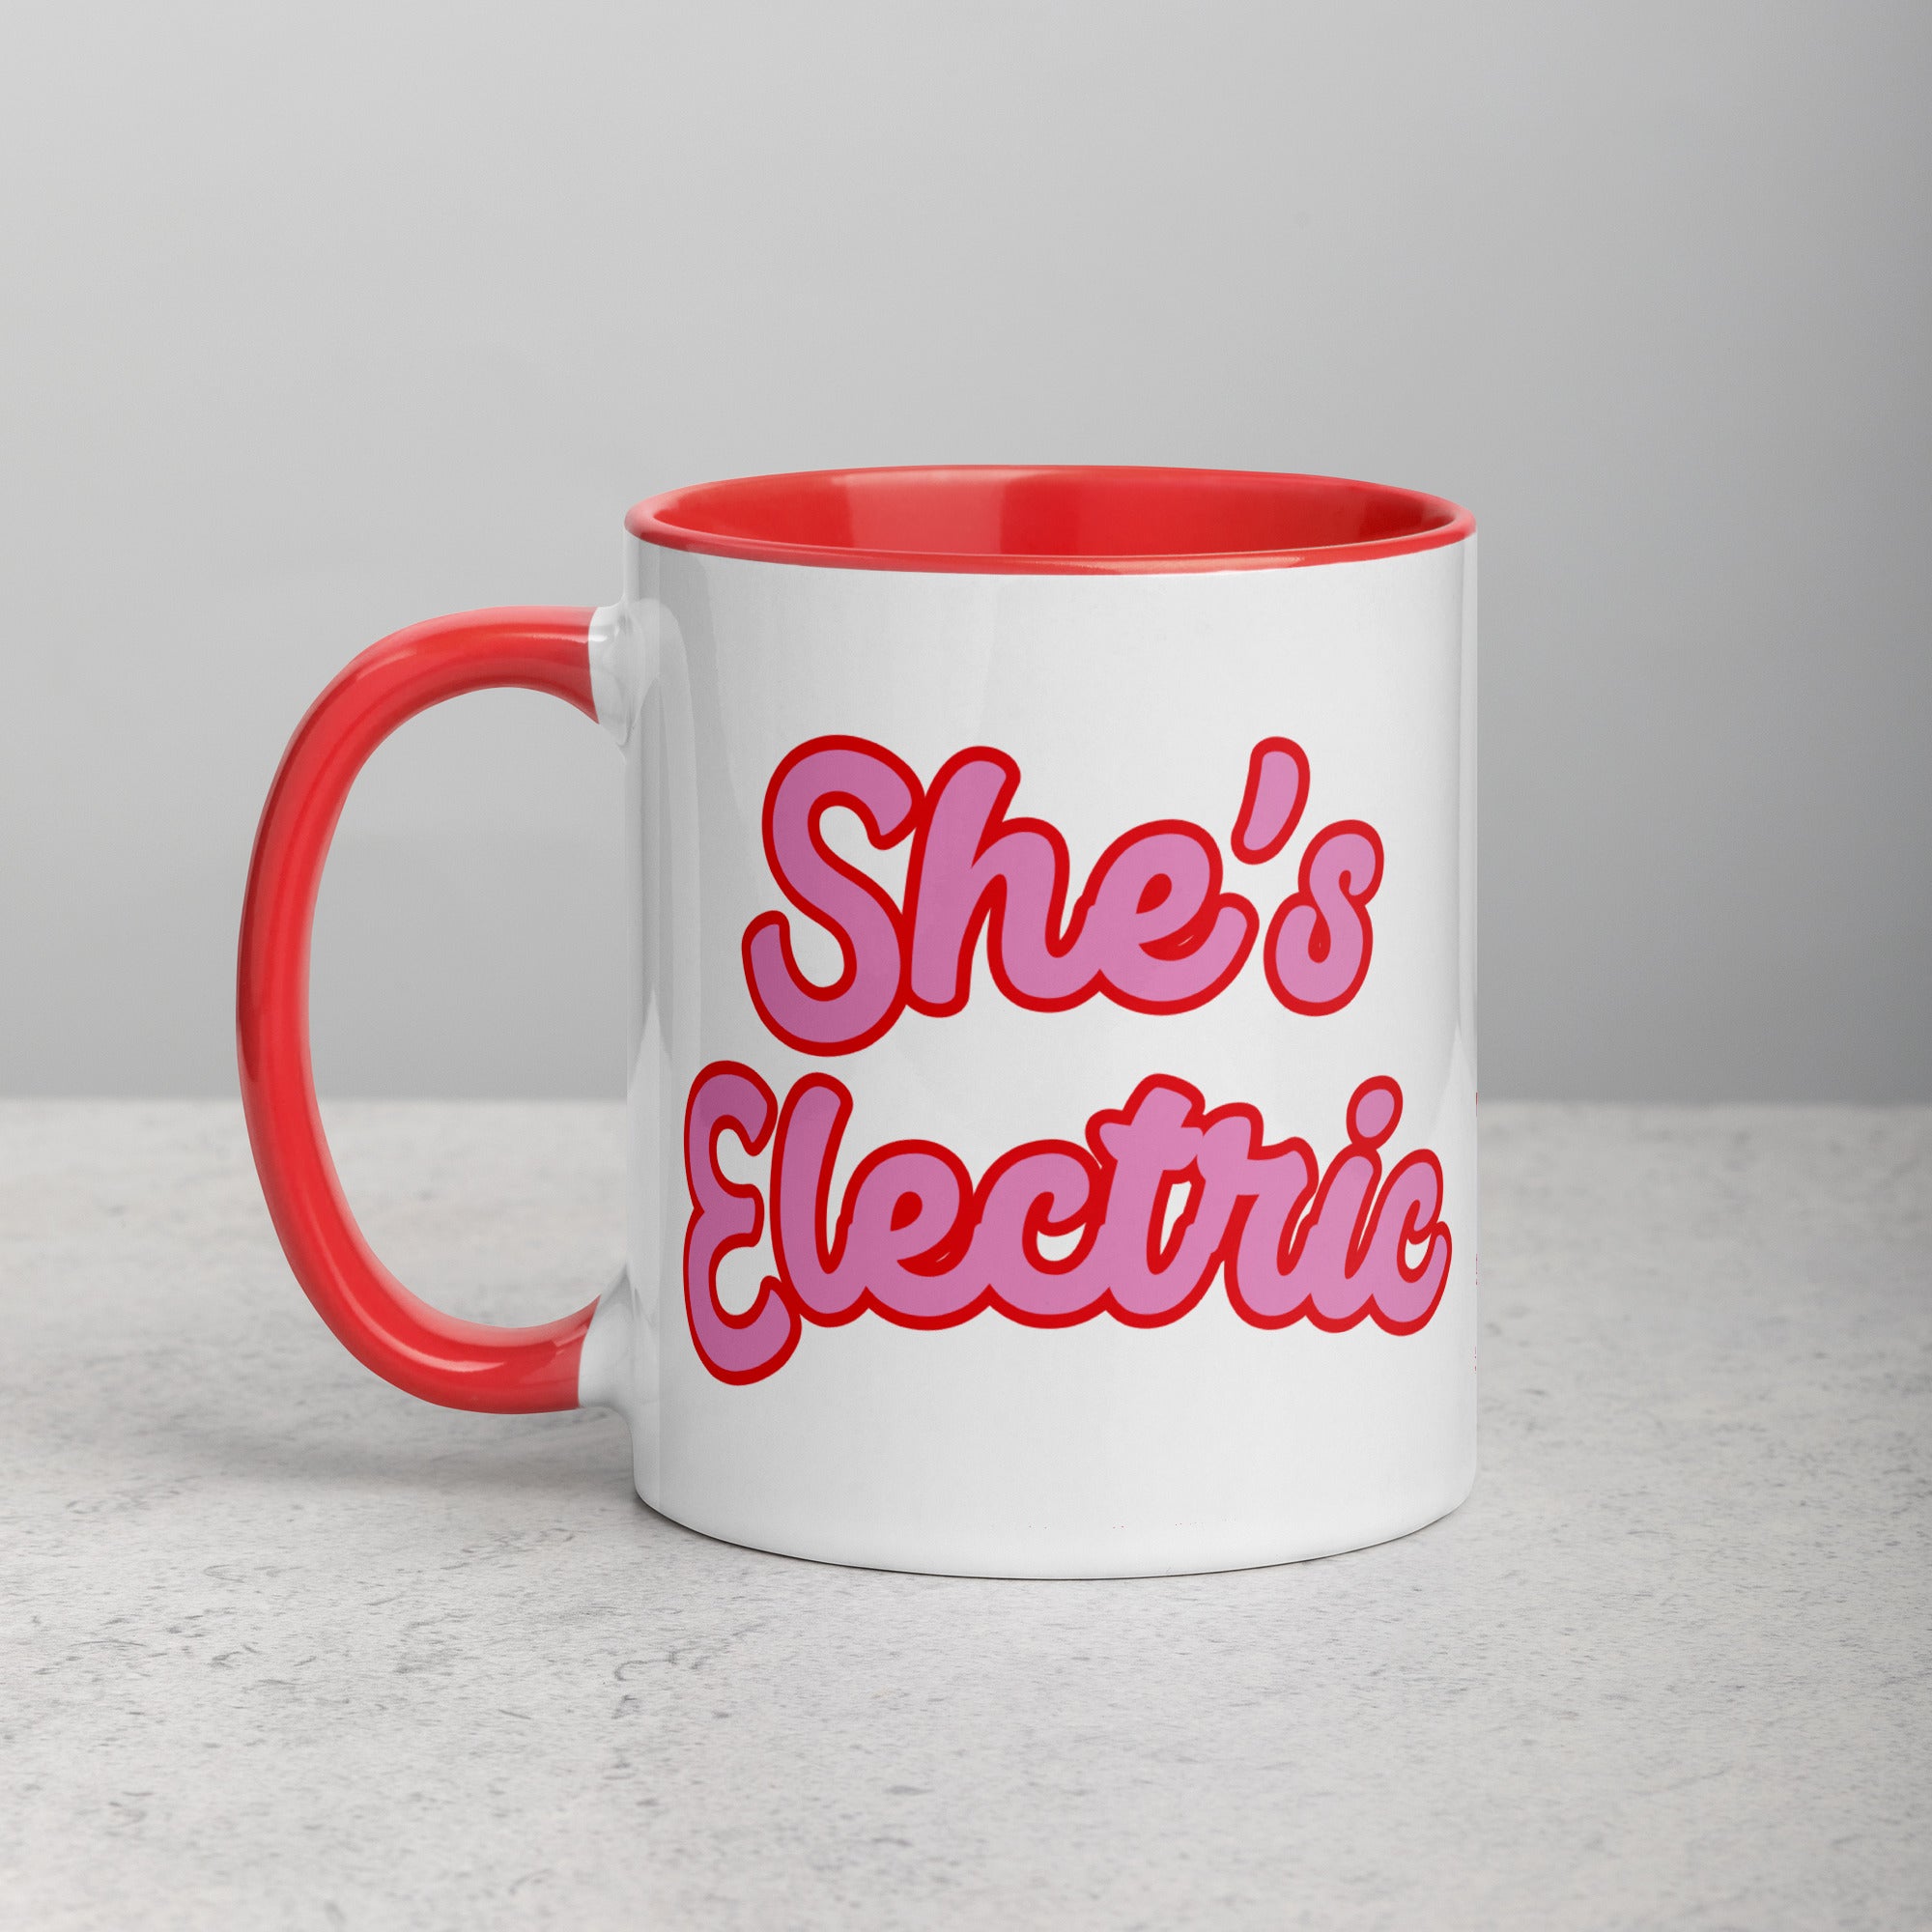 SHE'S ELECTRIC Printed Mug with optional inside colour